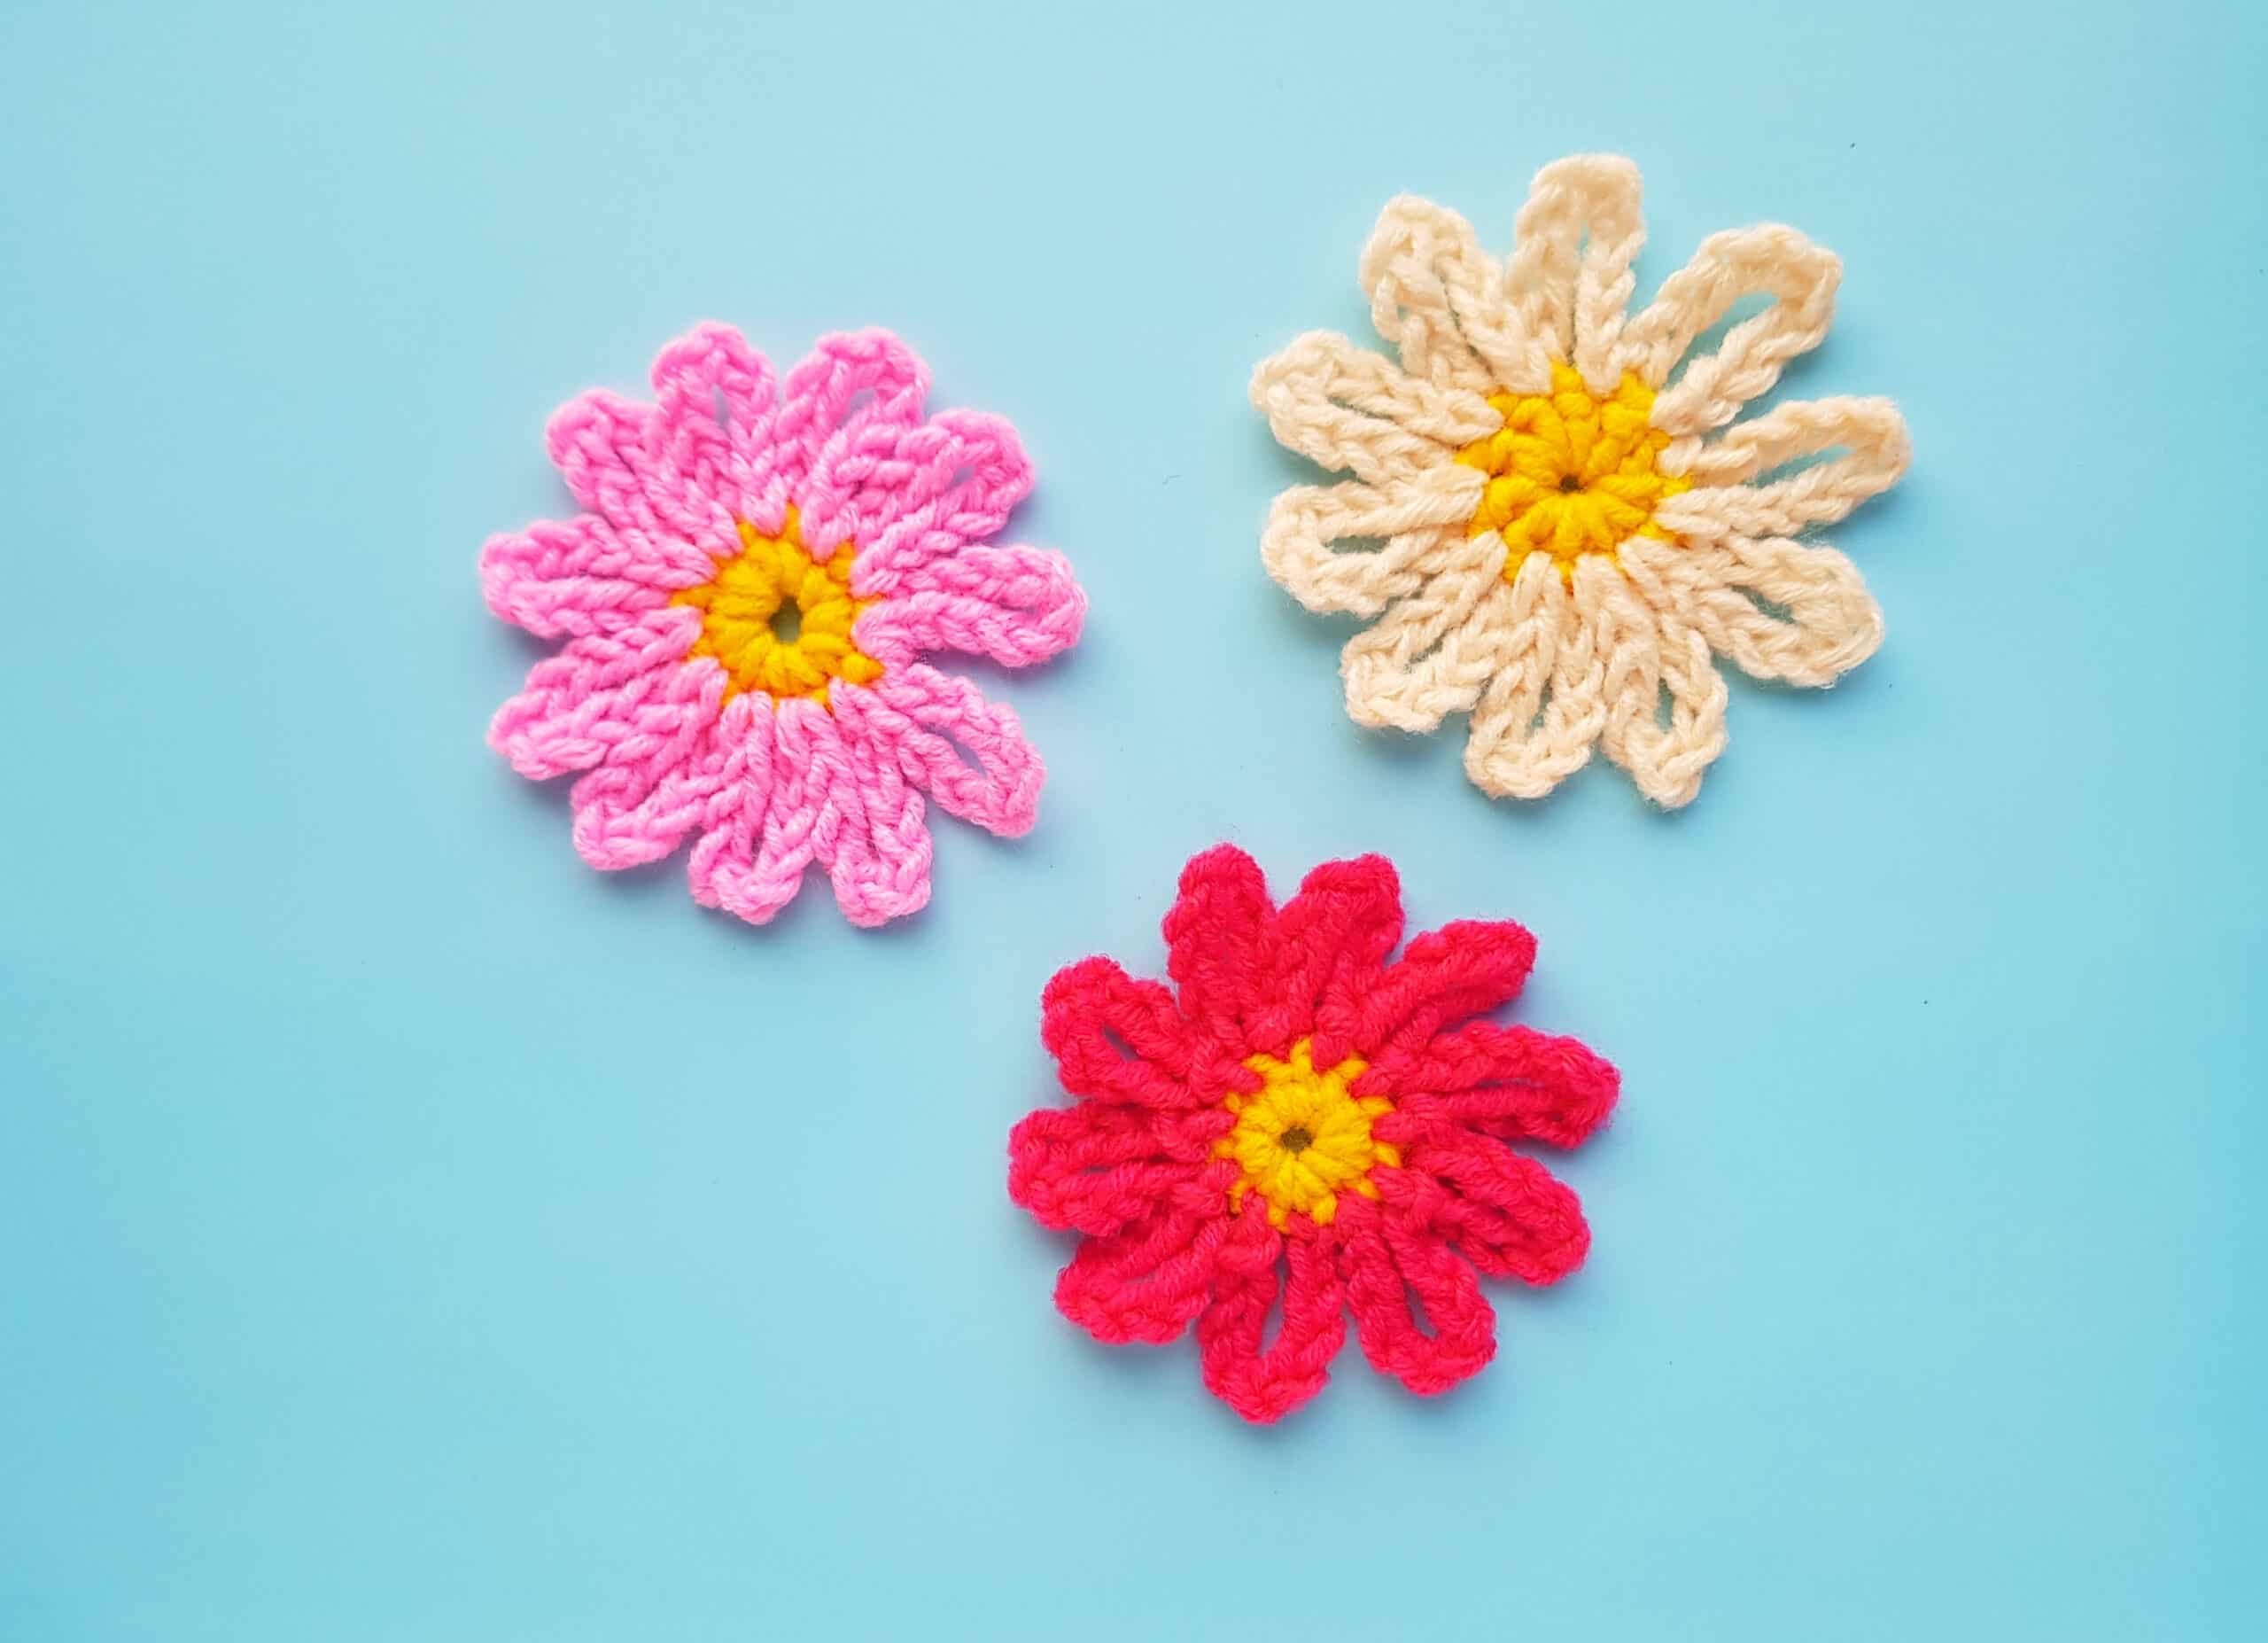 Open Loop Petals Crochet Flower Design To Make Crochet Flower Patterns